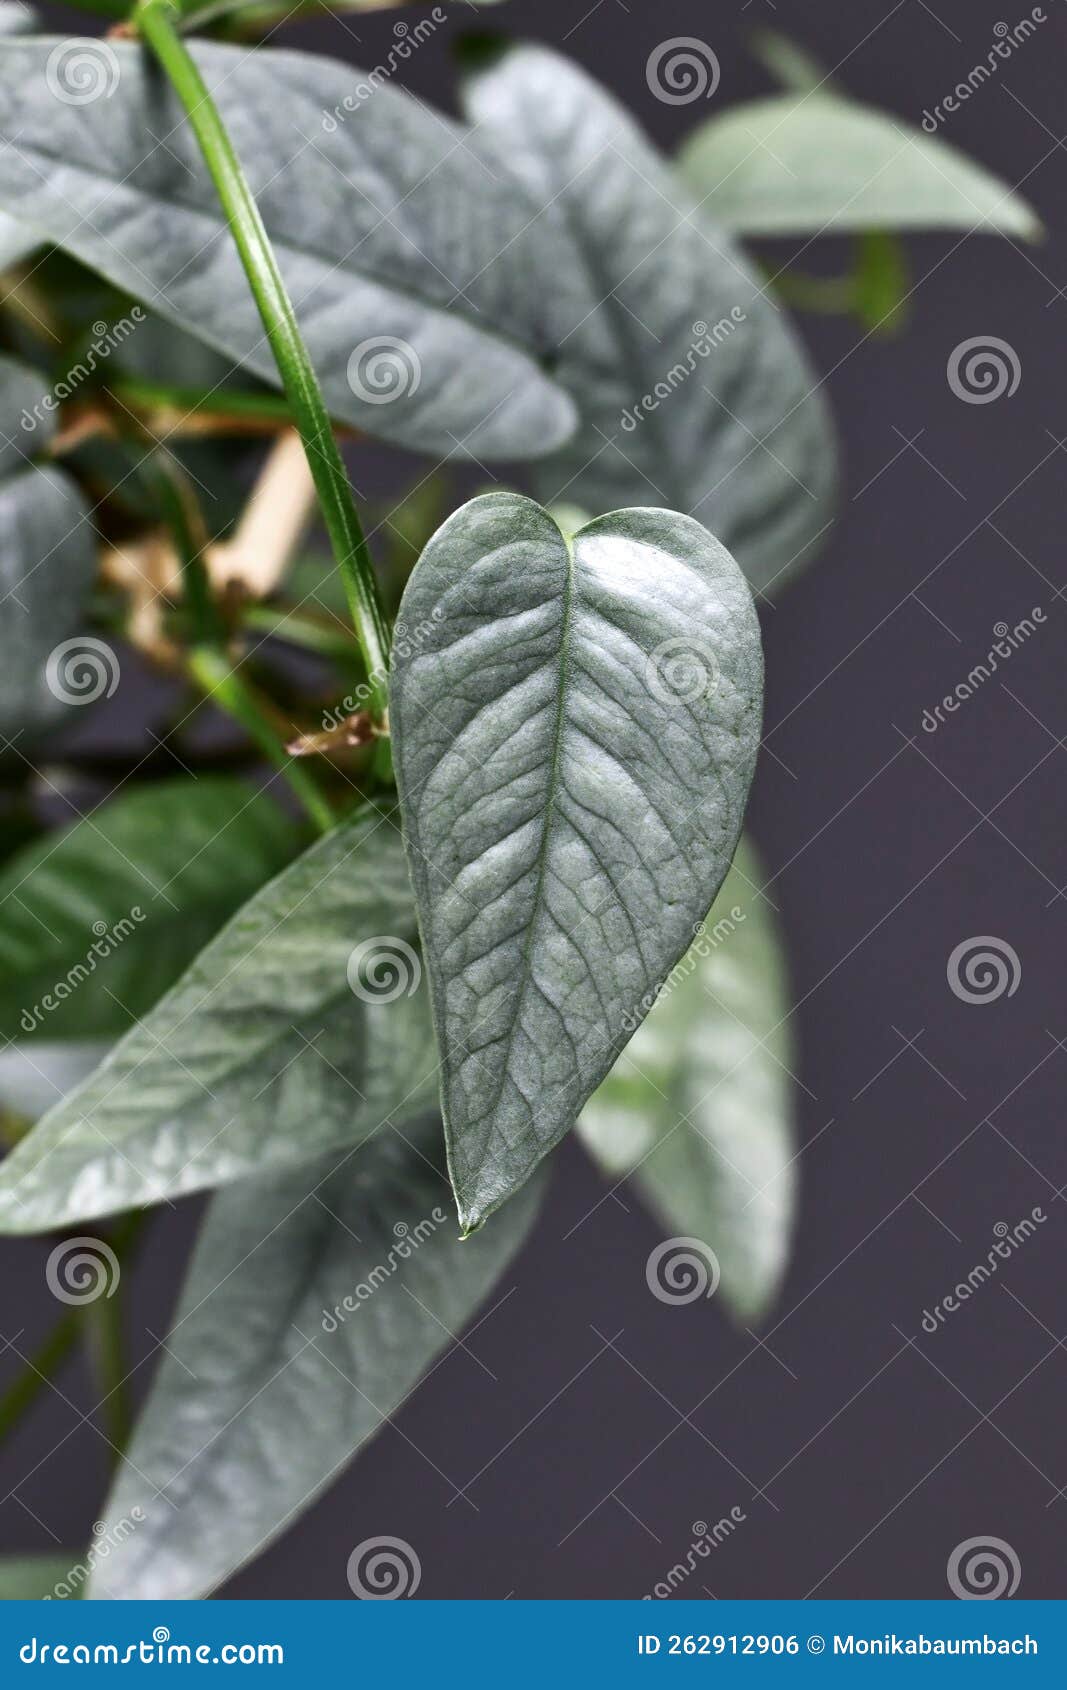 leaf of tropical 'epipremnum pinnatum cebu blue' houseplant